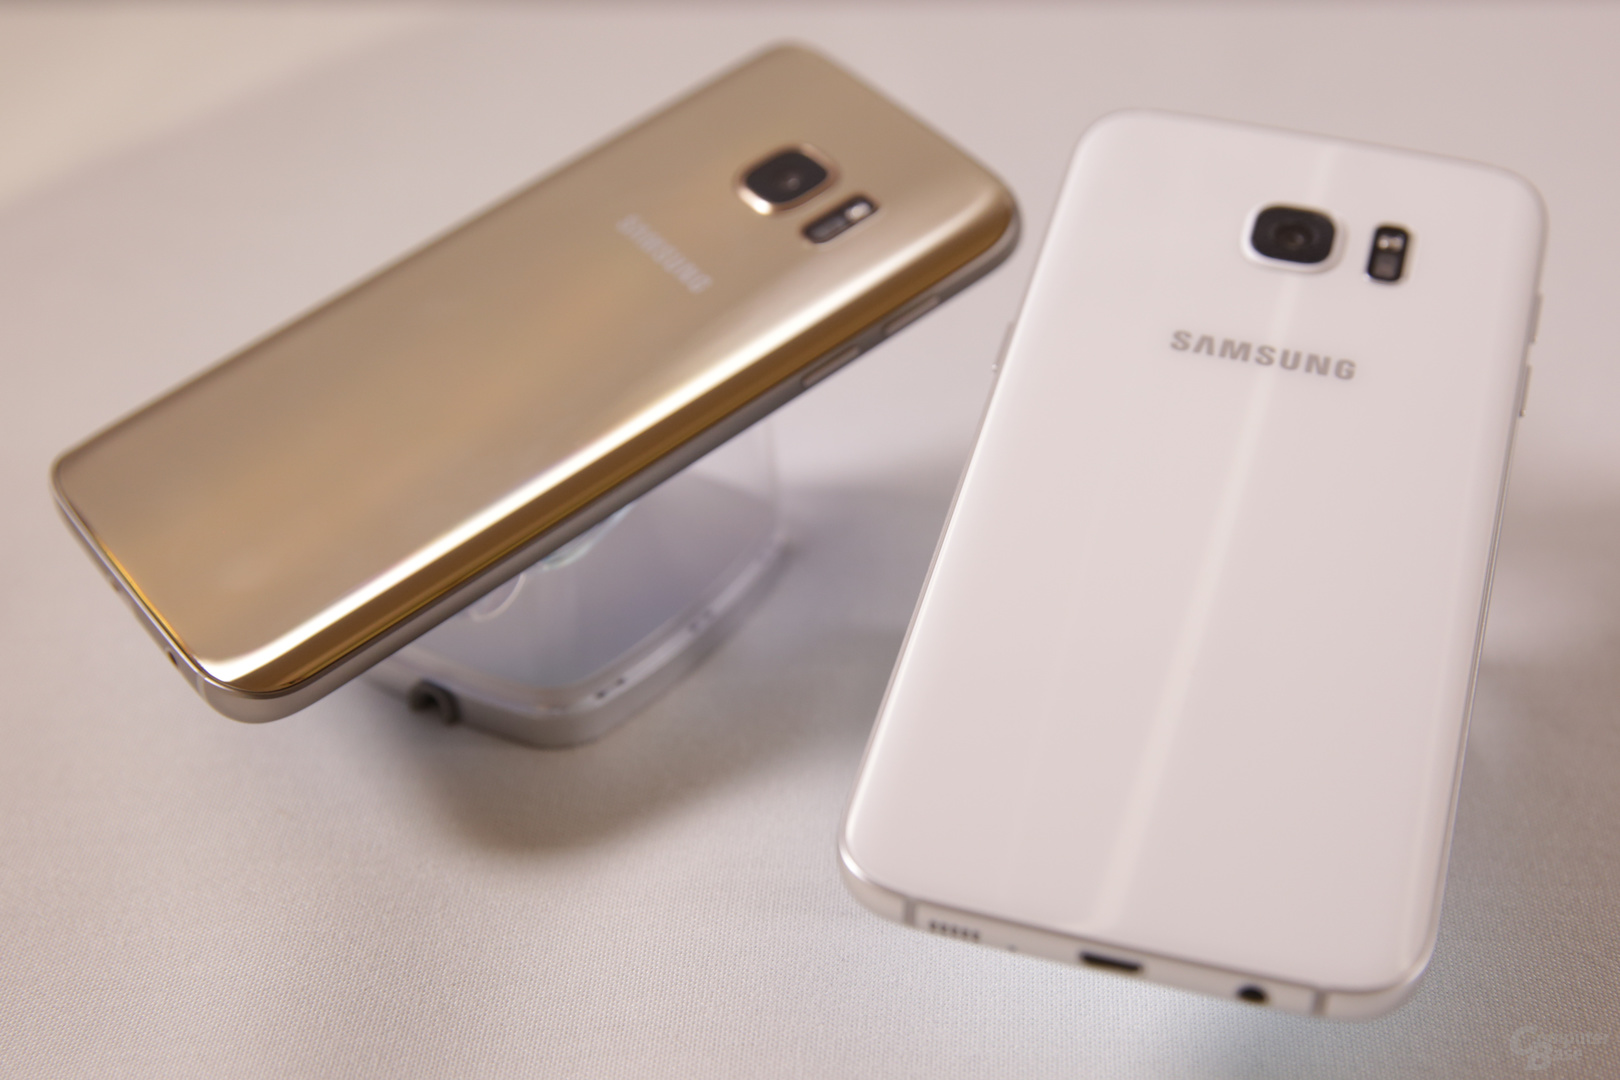 Galaxy S7 in Gold, Galaxy S7 edge in Weiß